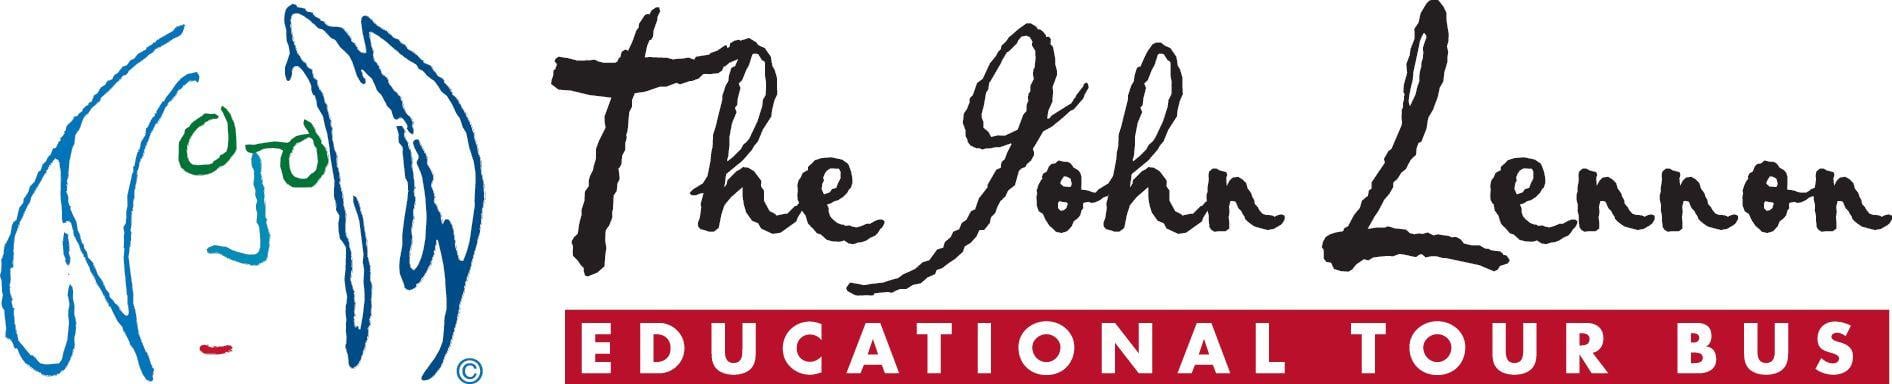 John Lennon Original Logo - Sponsorship: John Lennon Educational Tour Bus